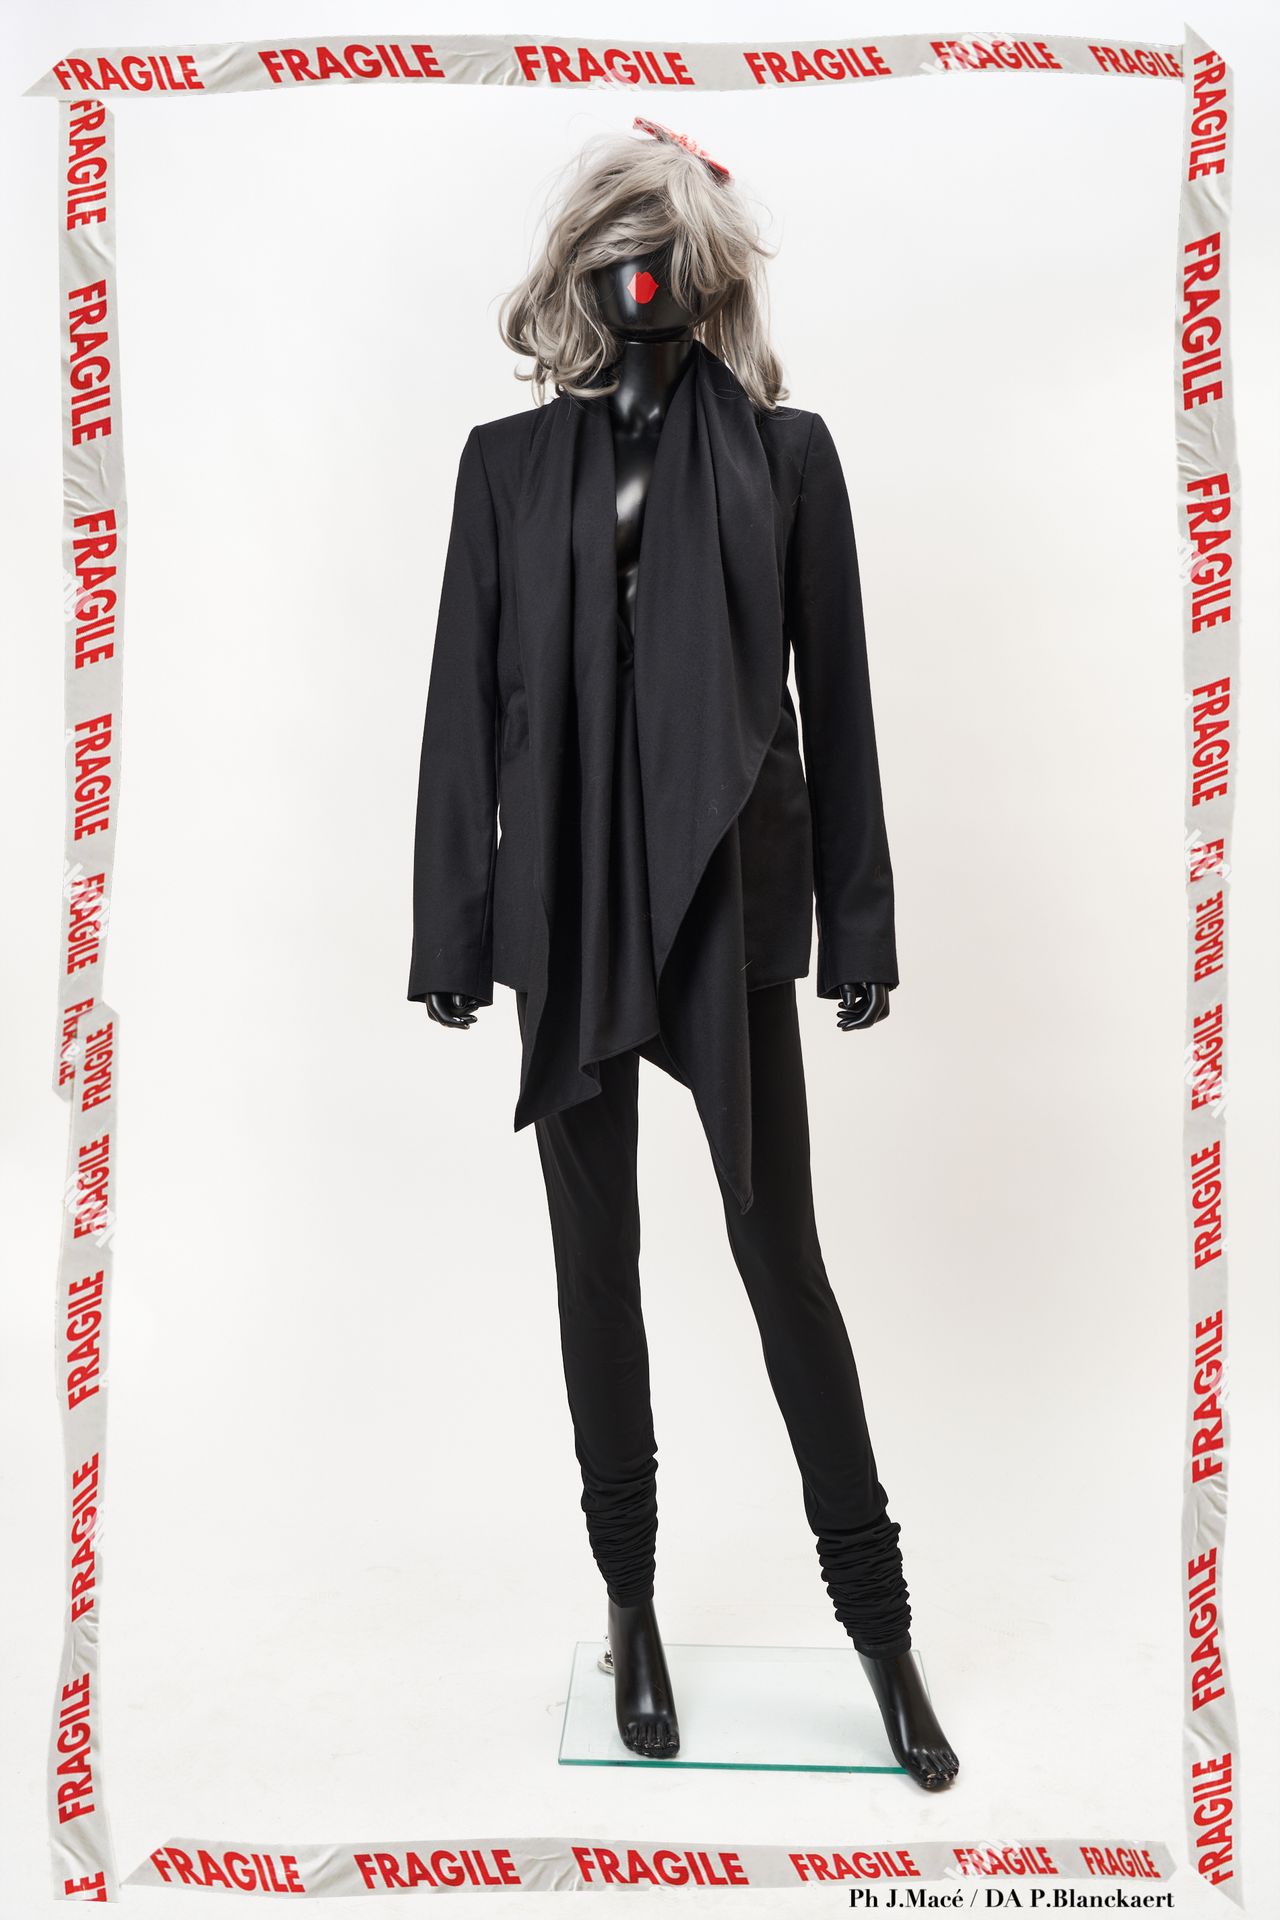 MAISON MARTIN MARGIELA Jacket

in black woolen cloth, scarf collar 

S 44 It